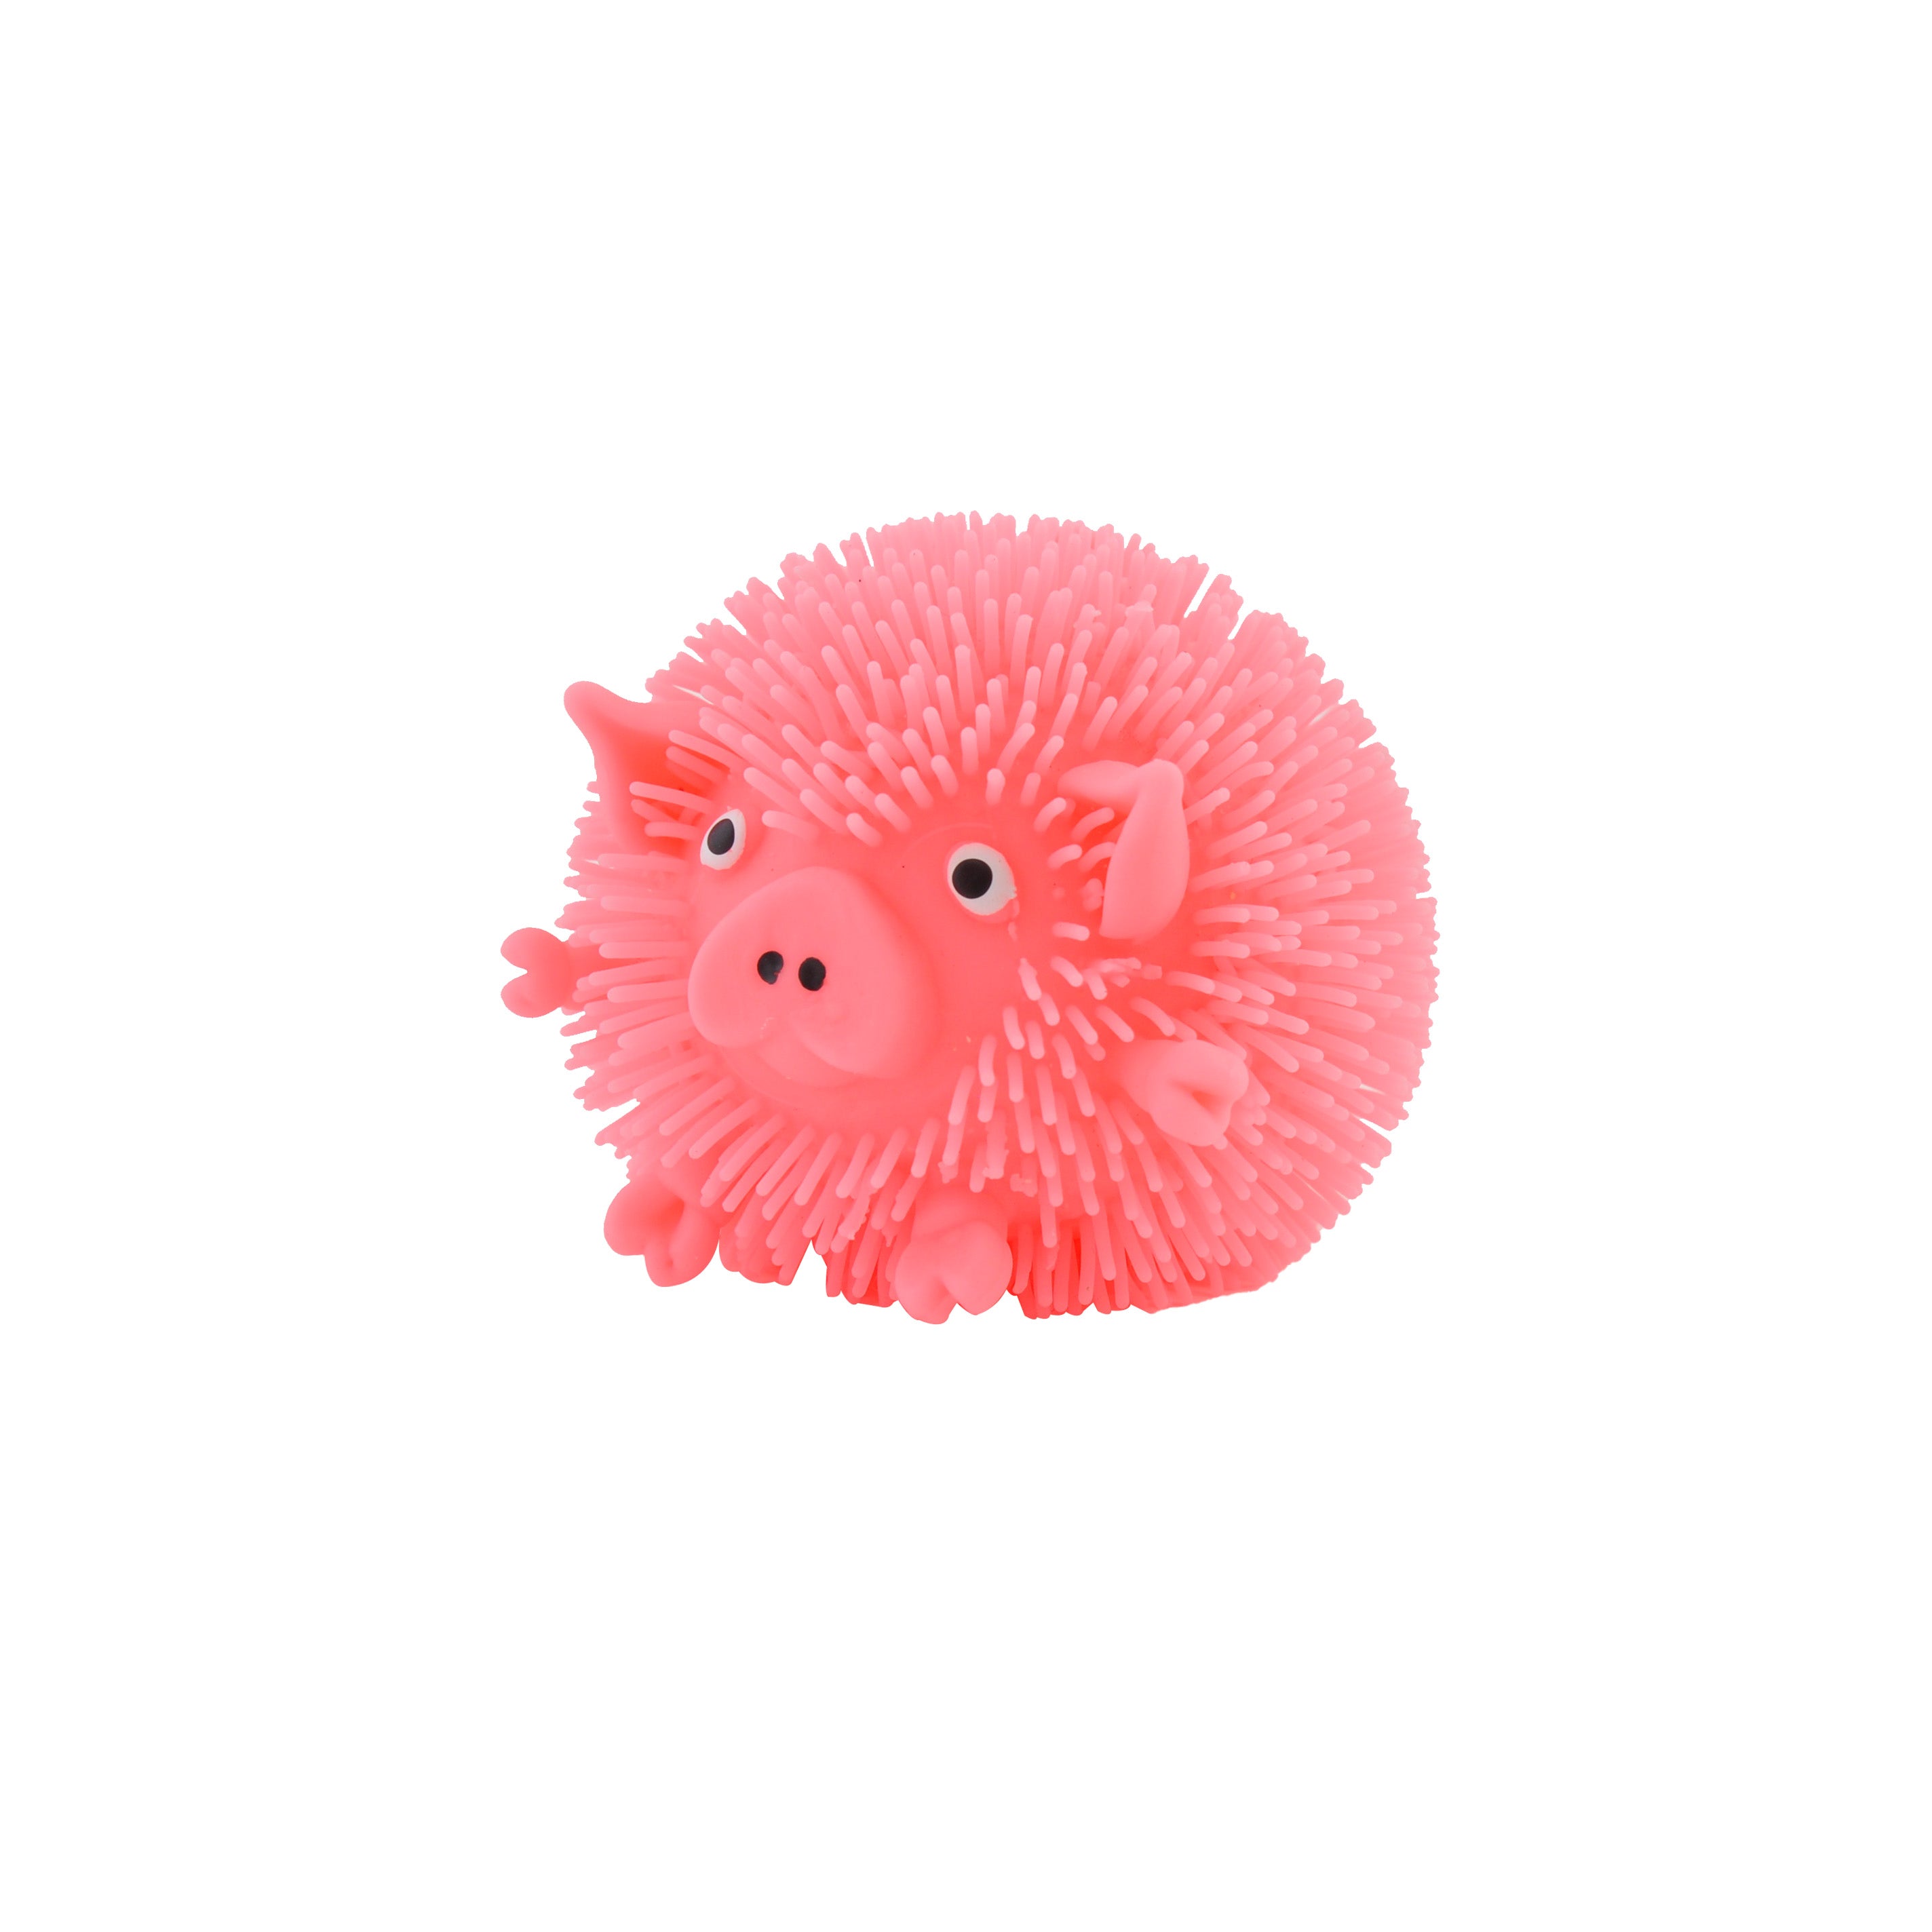 Noodle Critters - Pink Pig